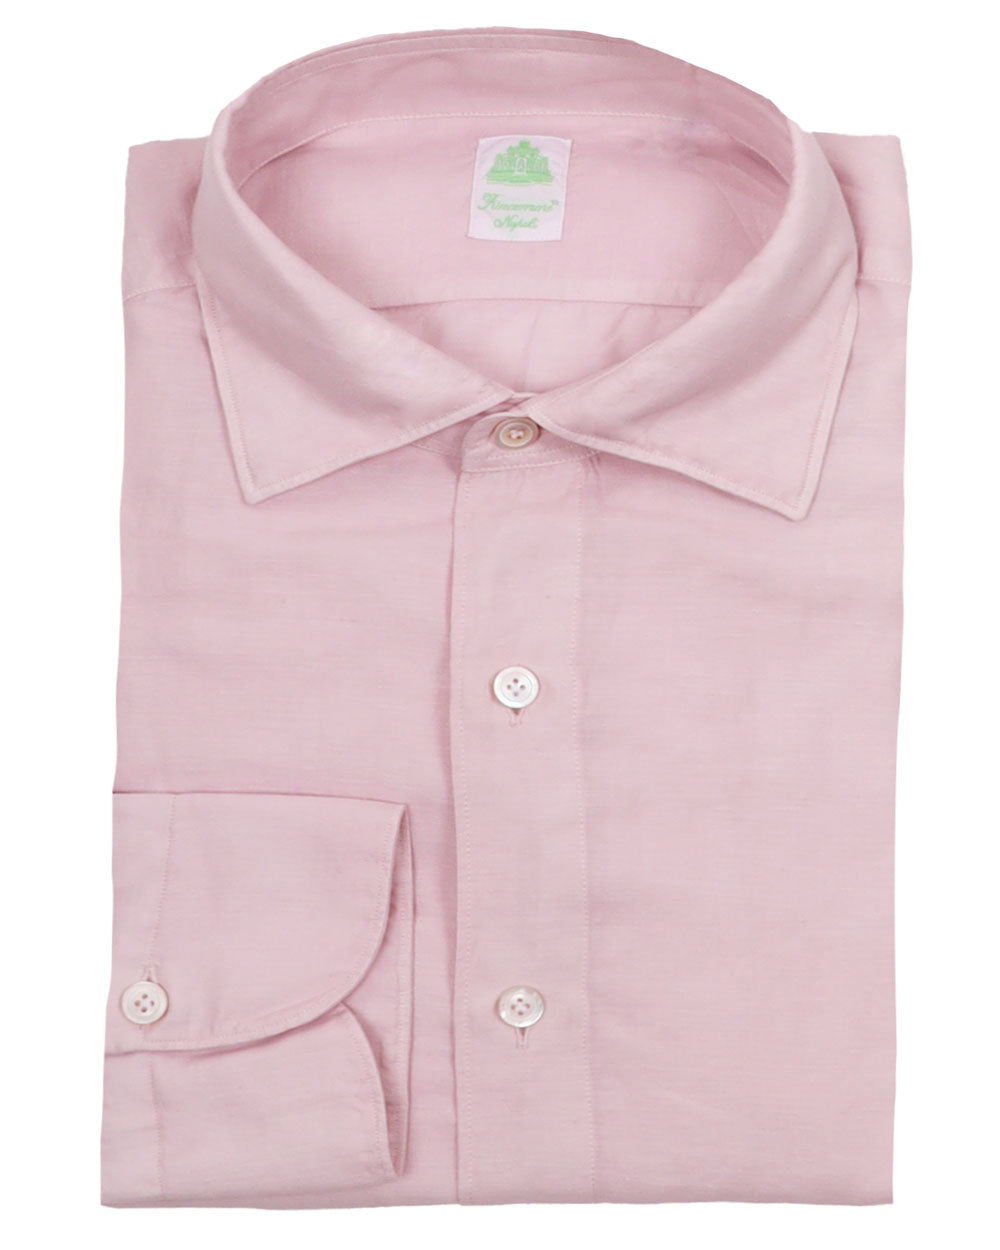 Blush Pink Sportshirt